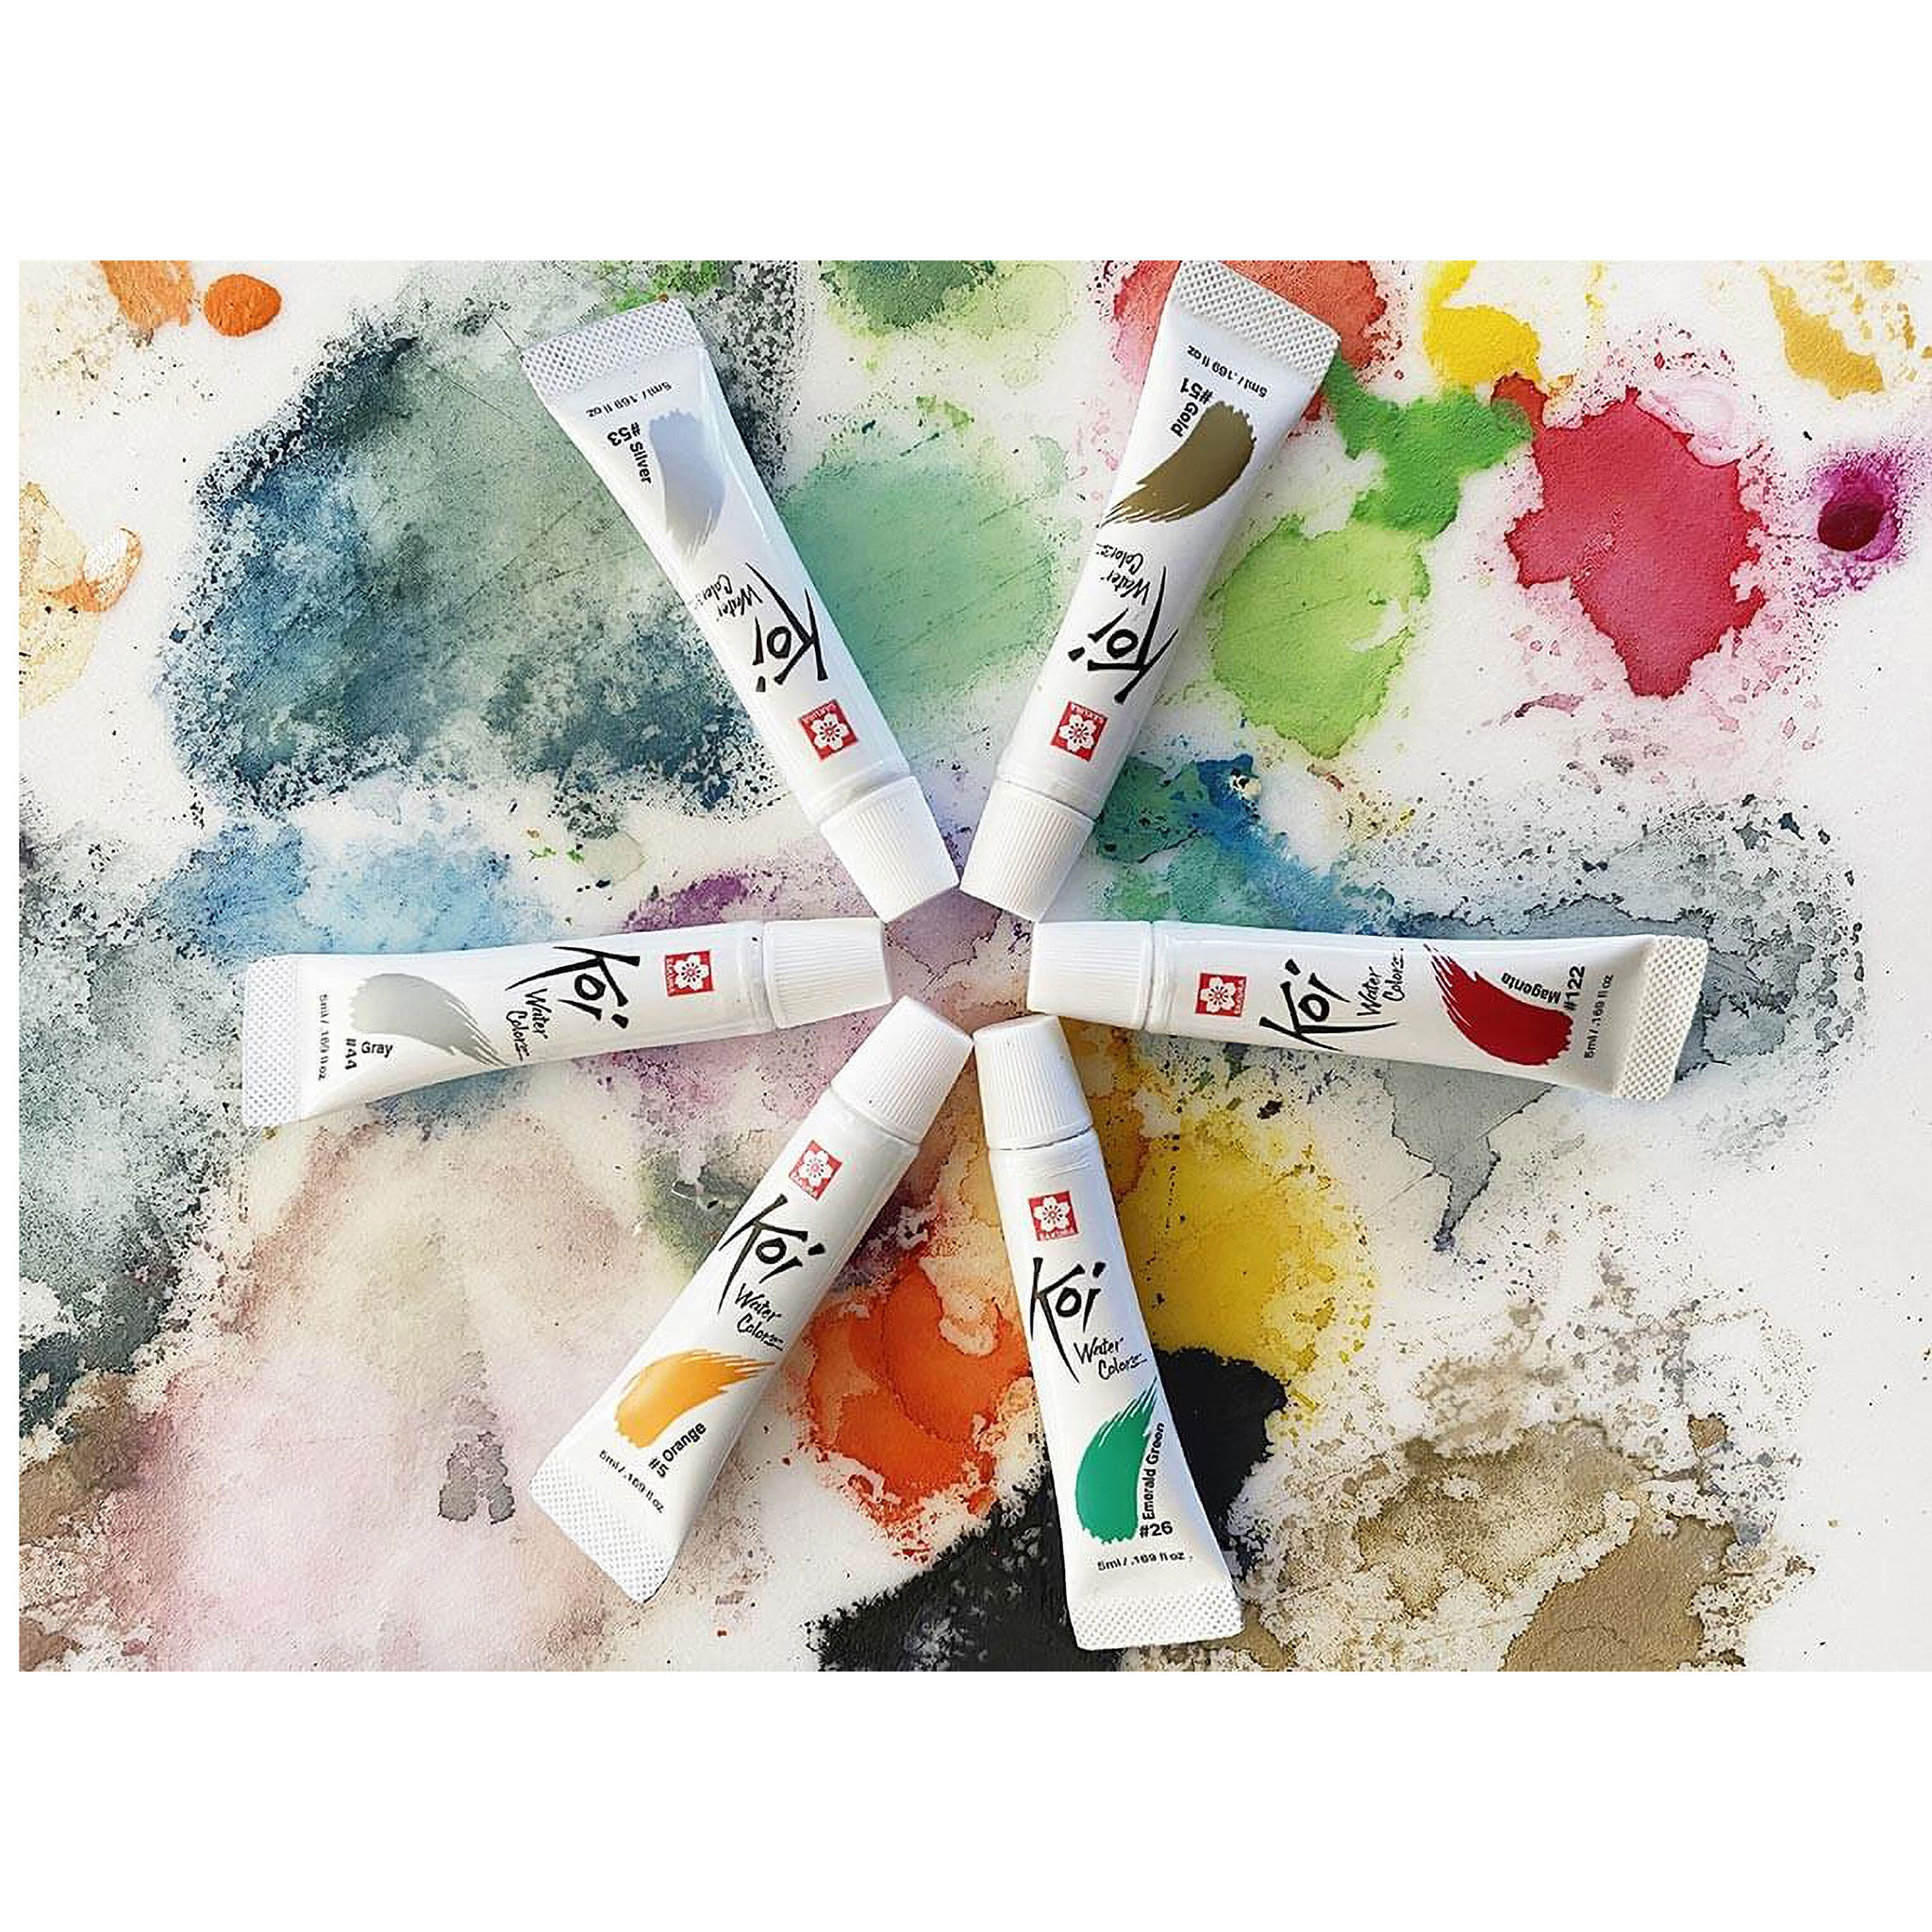 Koi Watercolor Paint Tubes 5ml set of 12 by Sakura - 084511373747